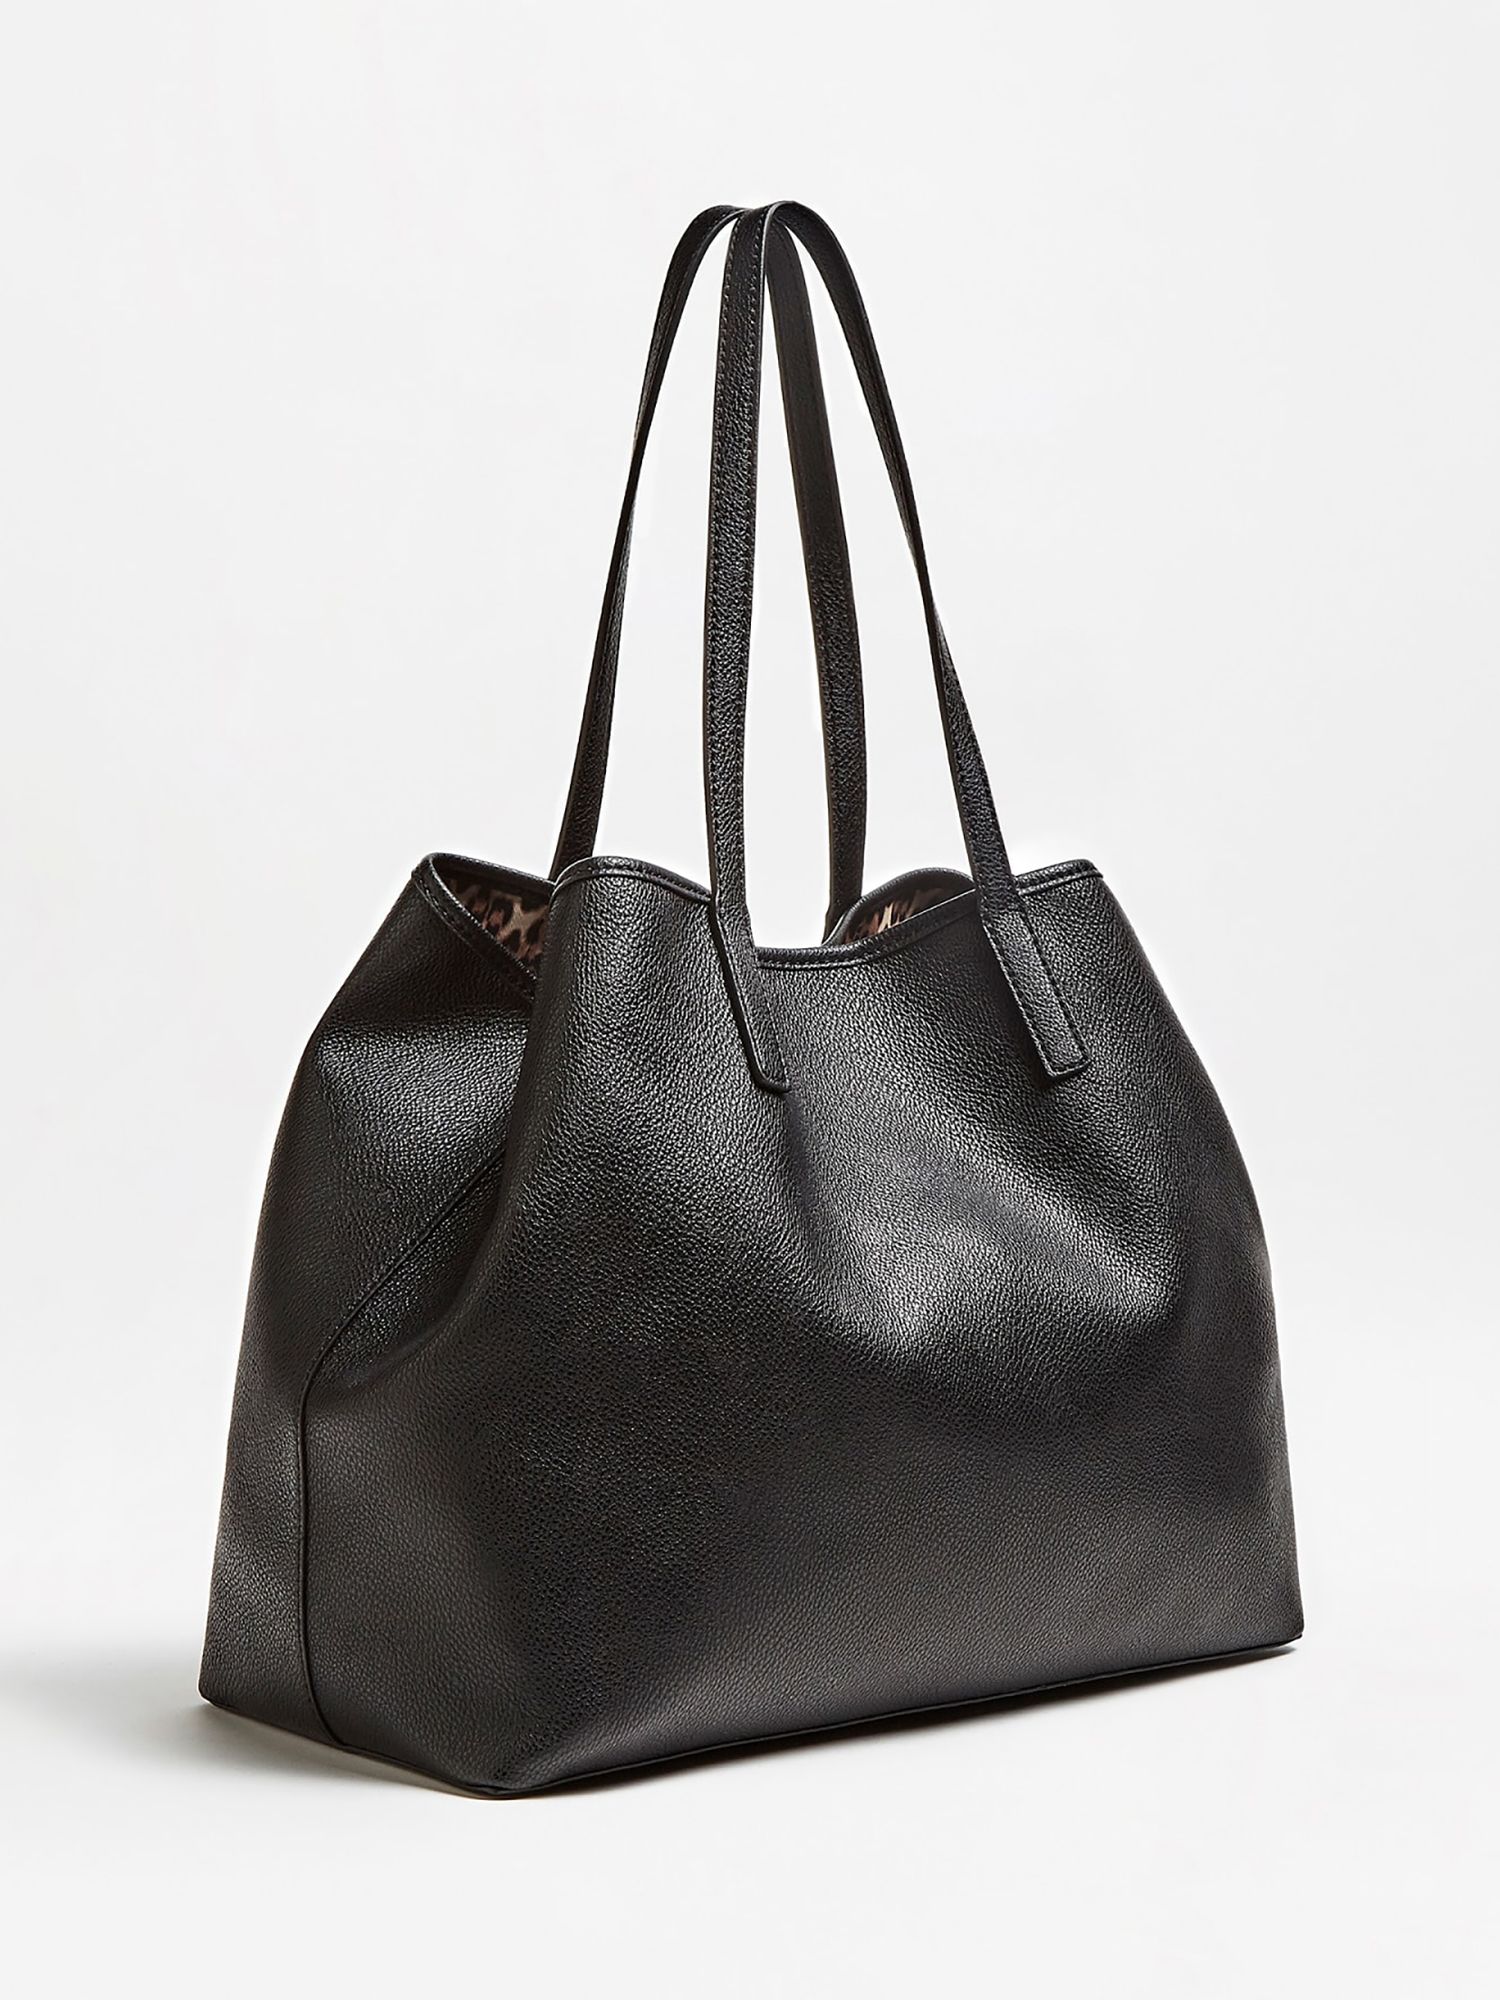 GUESS Vikky Large Tote Bag, Black at John Lewis & Partners